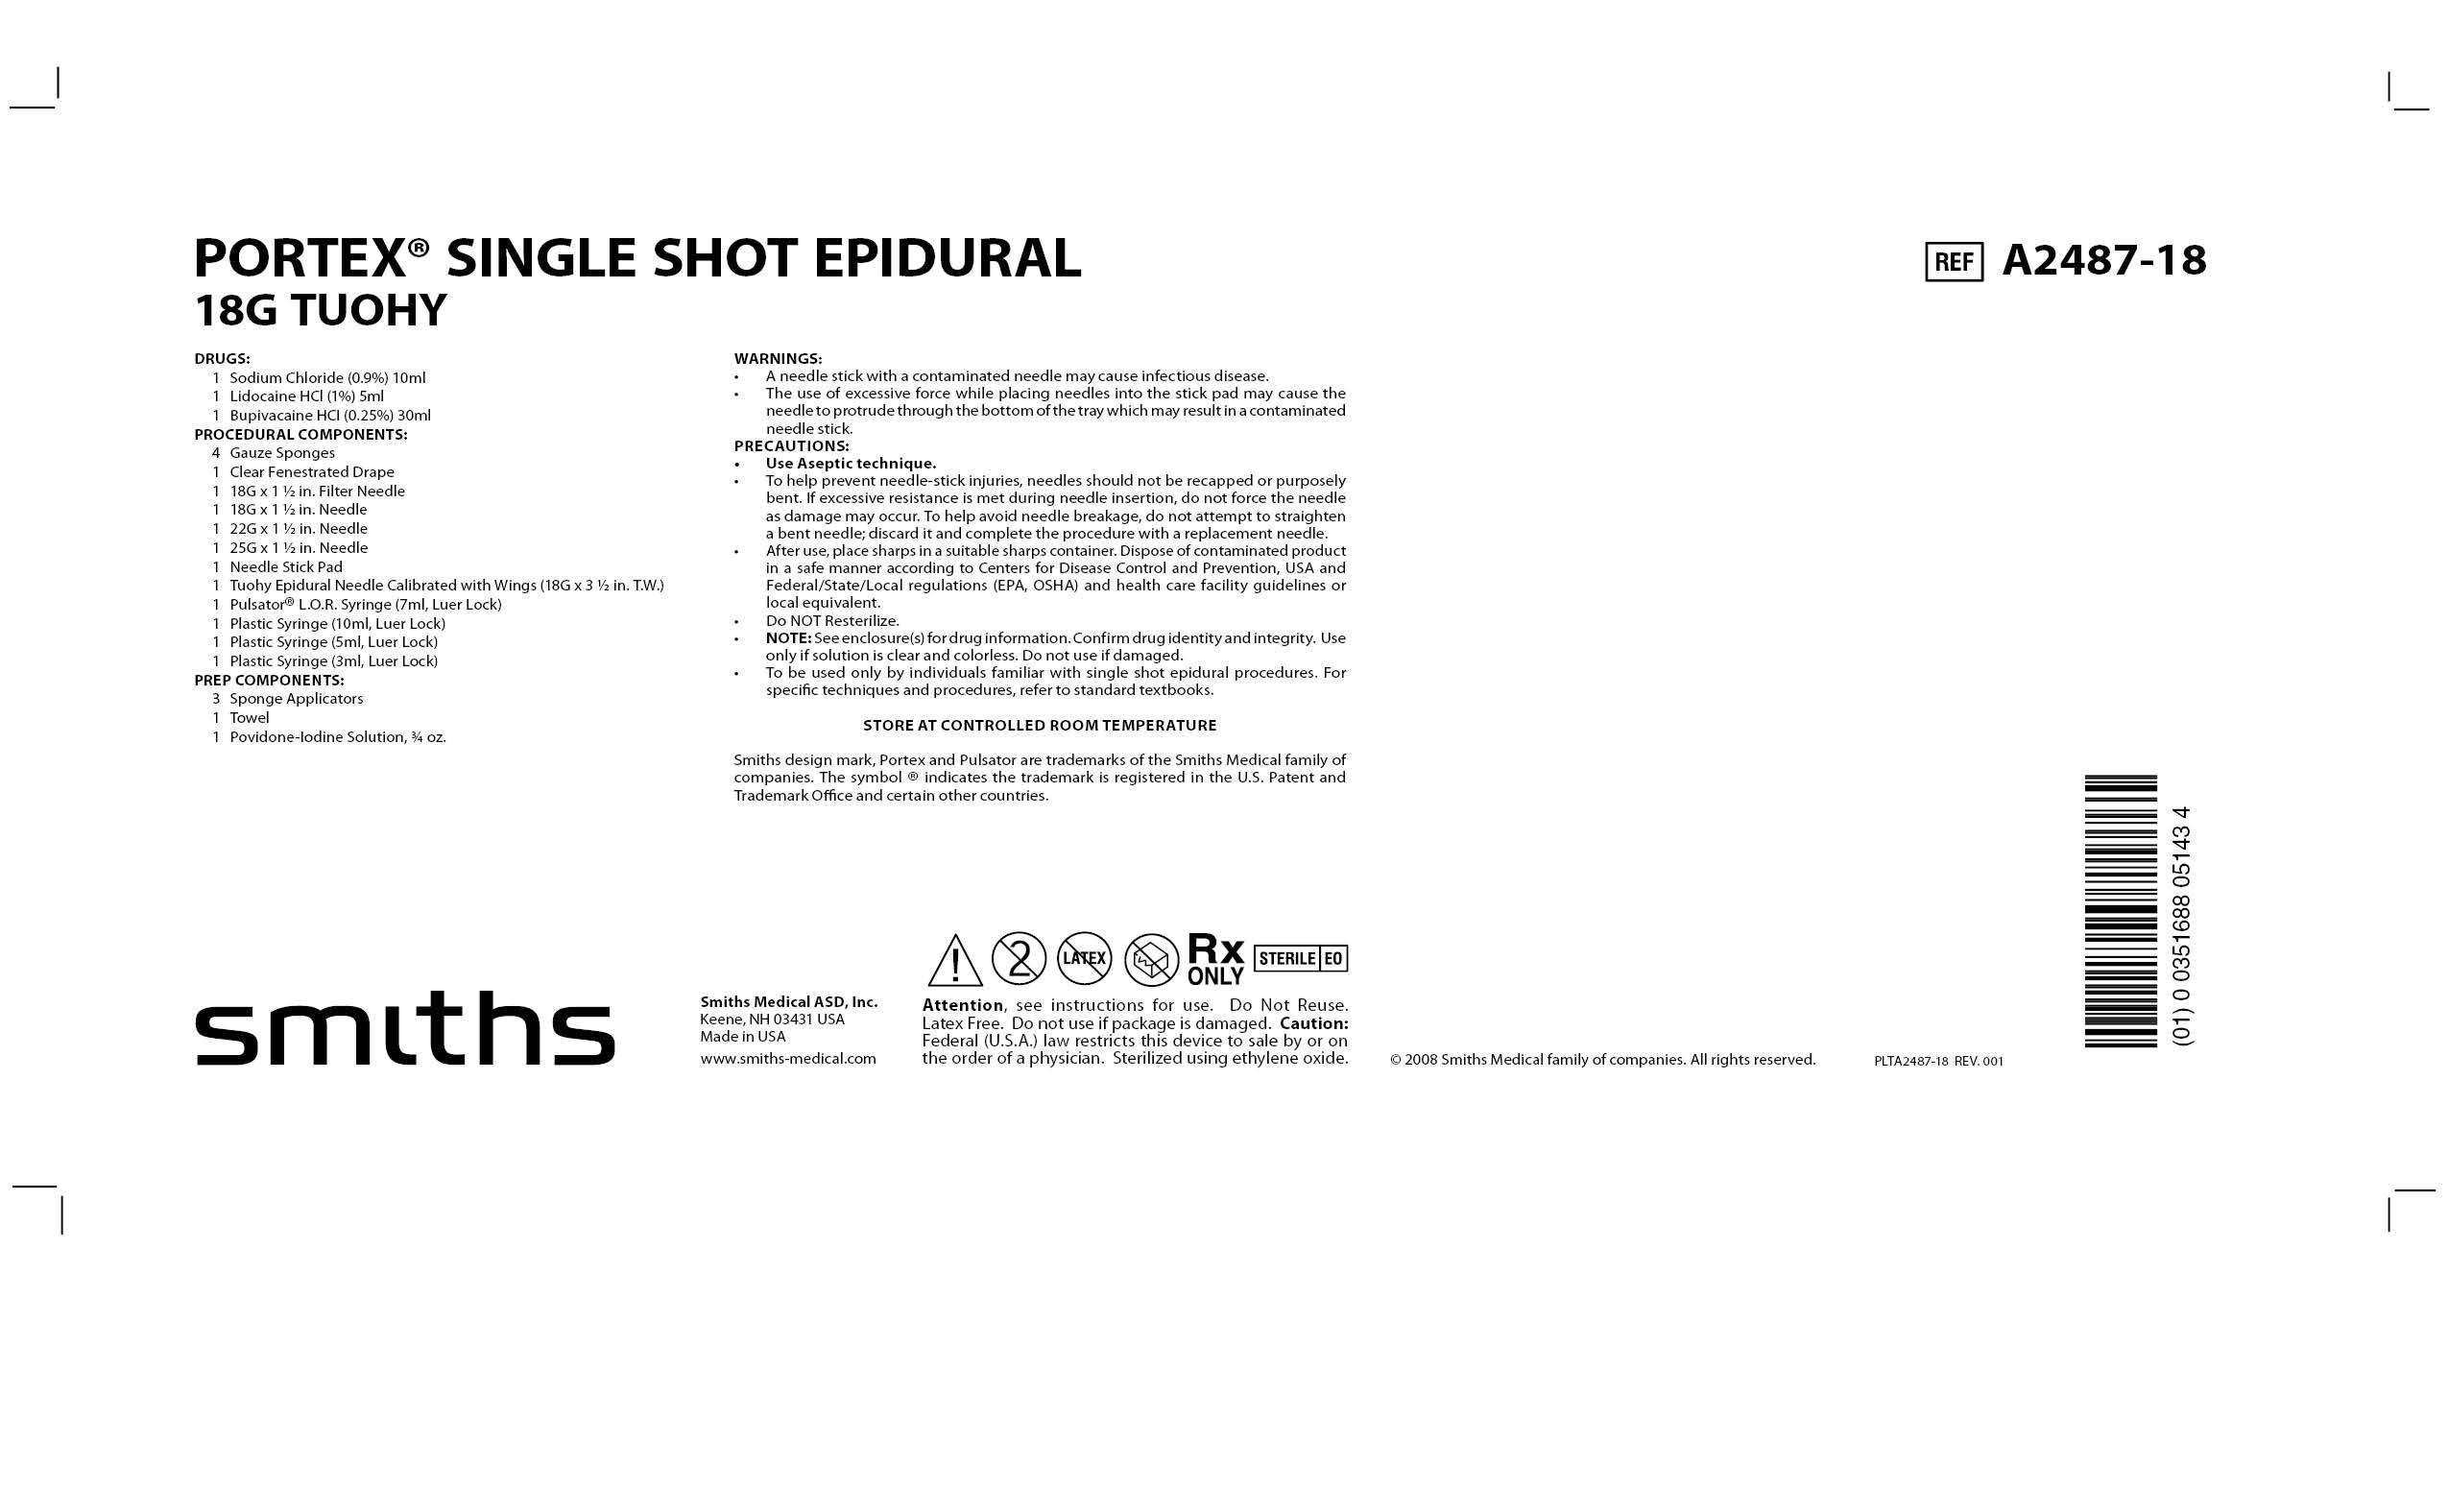 A2487-18 PORTEX SINGLE SHOT EPIDURAL